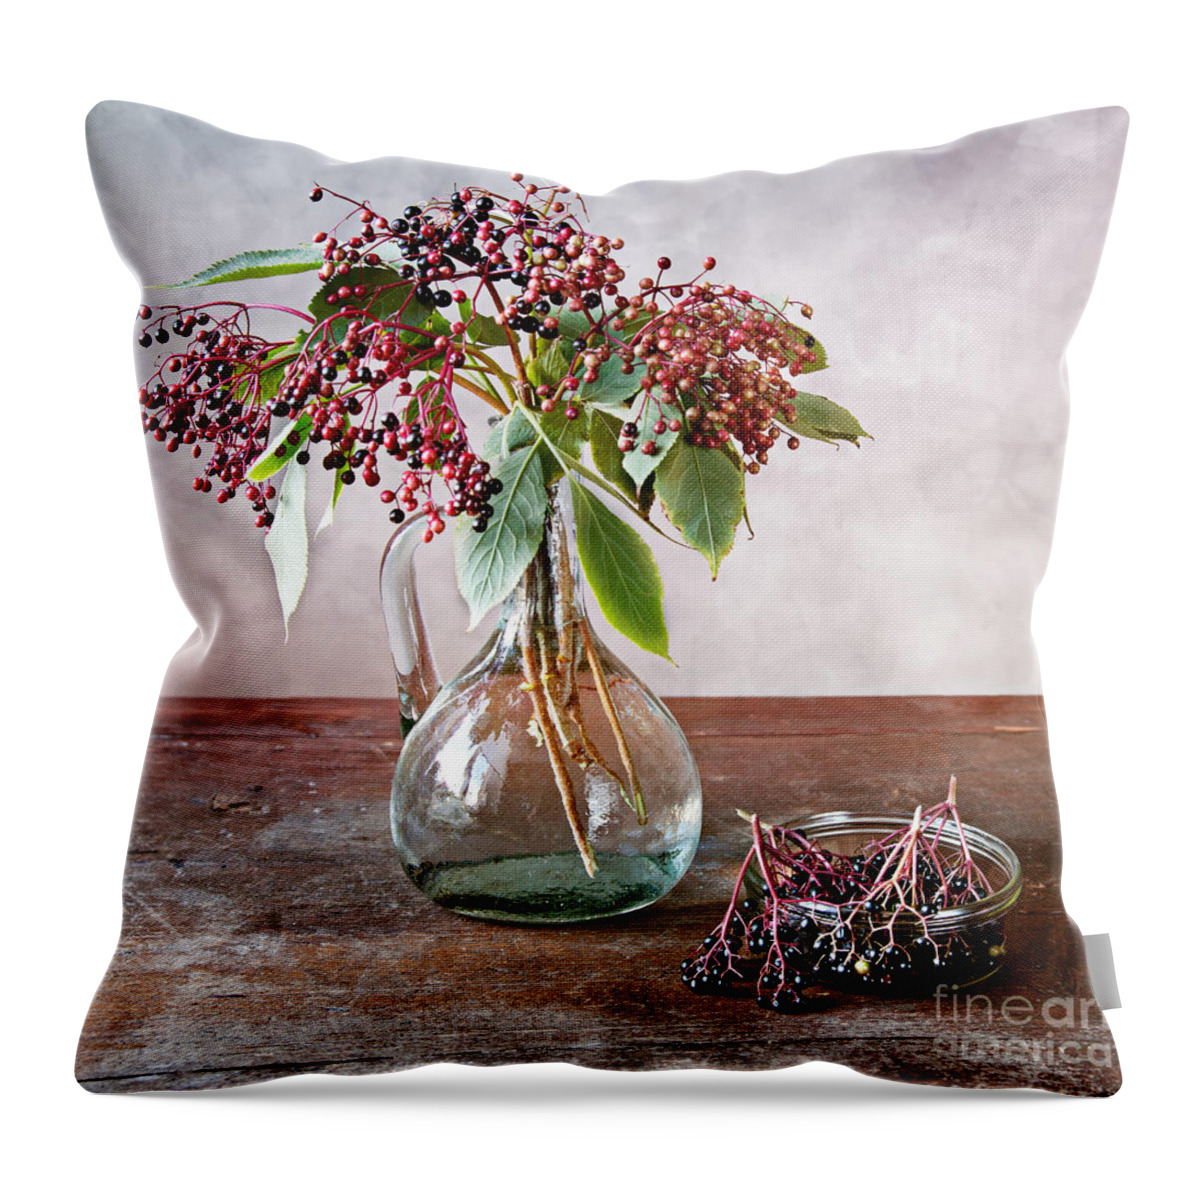 Autumn Throw Pillow featuring the photograph Elderberries 07 by Nailia Schwarz